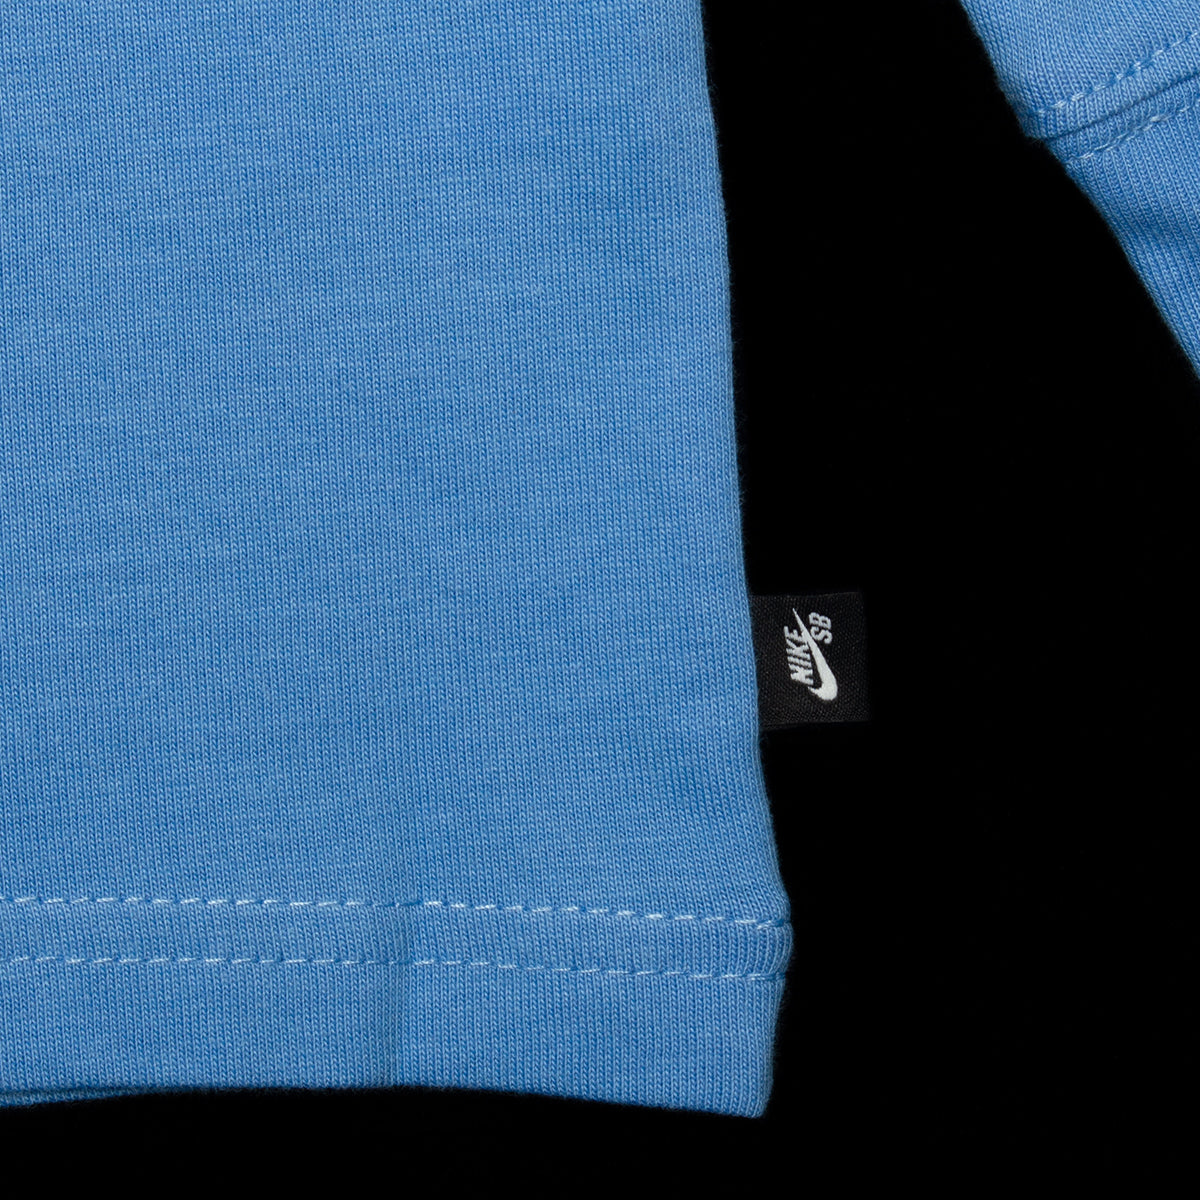 Nike SB | Max90 Brainwashed L/S T-Shirt Style # FQ3713-412 Color : University Blue